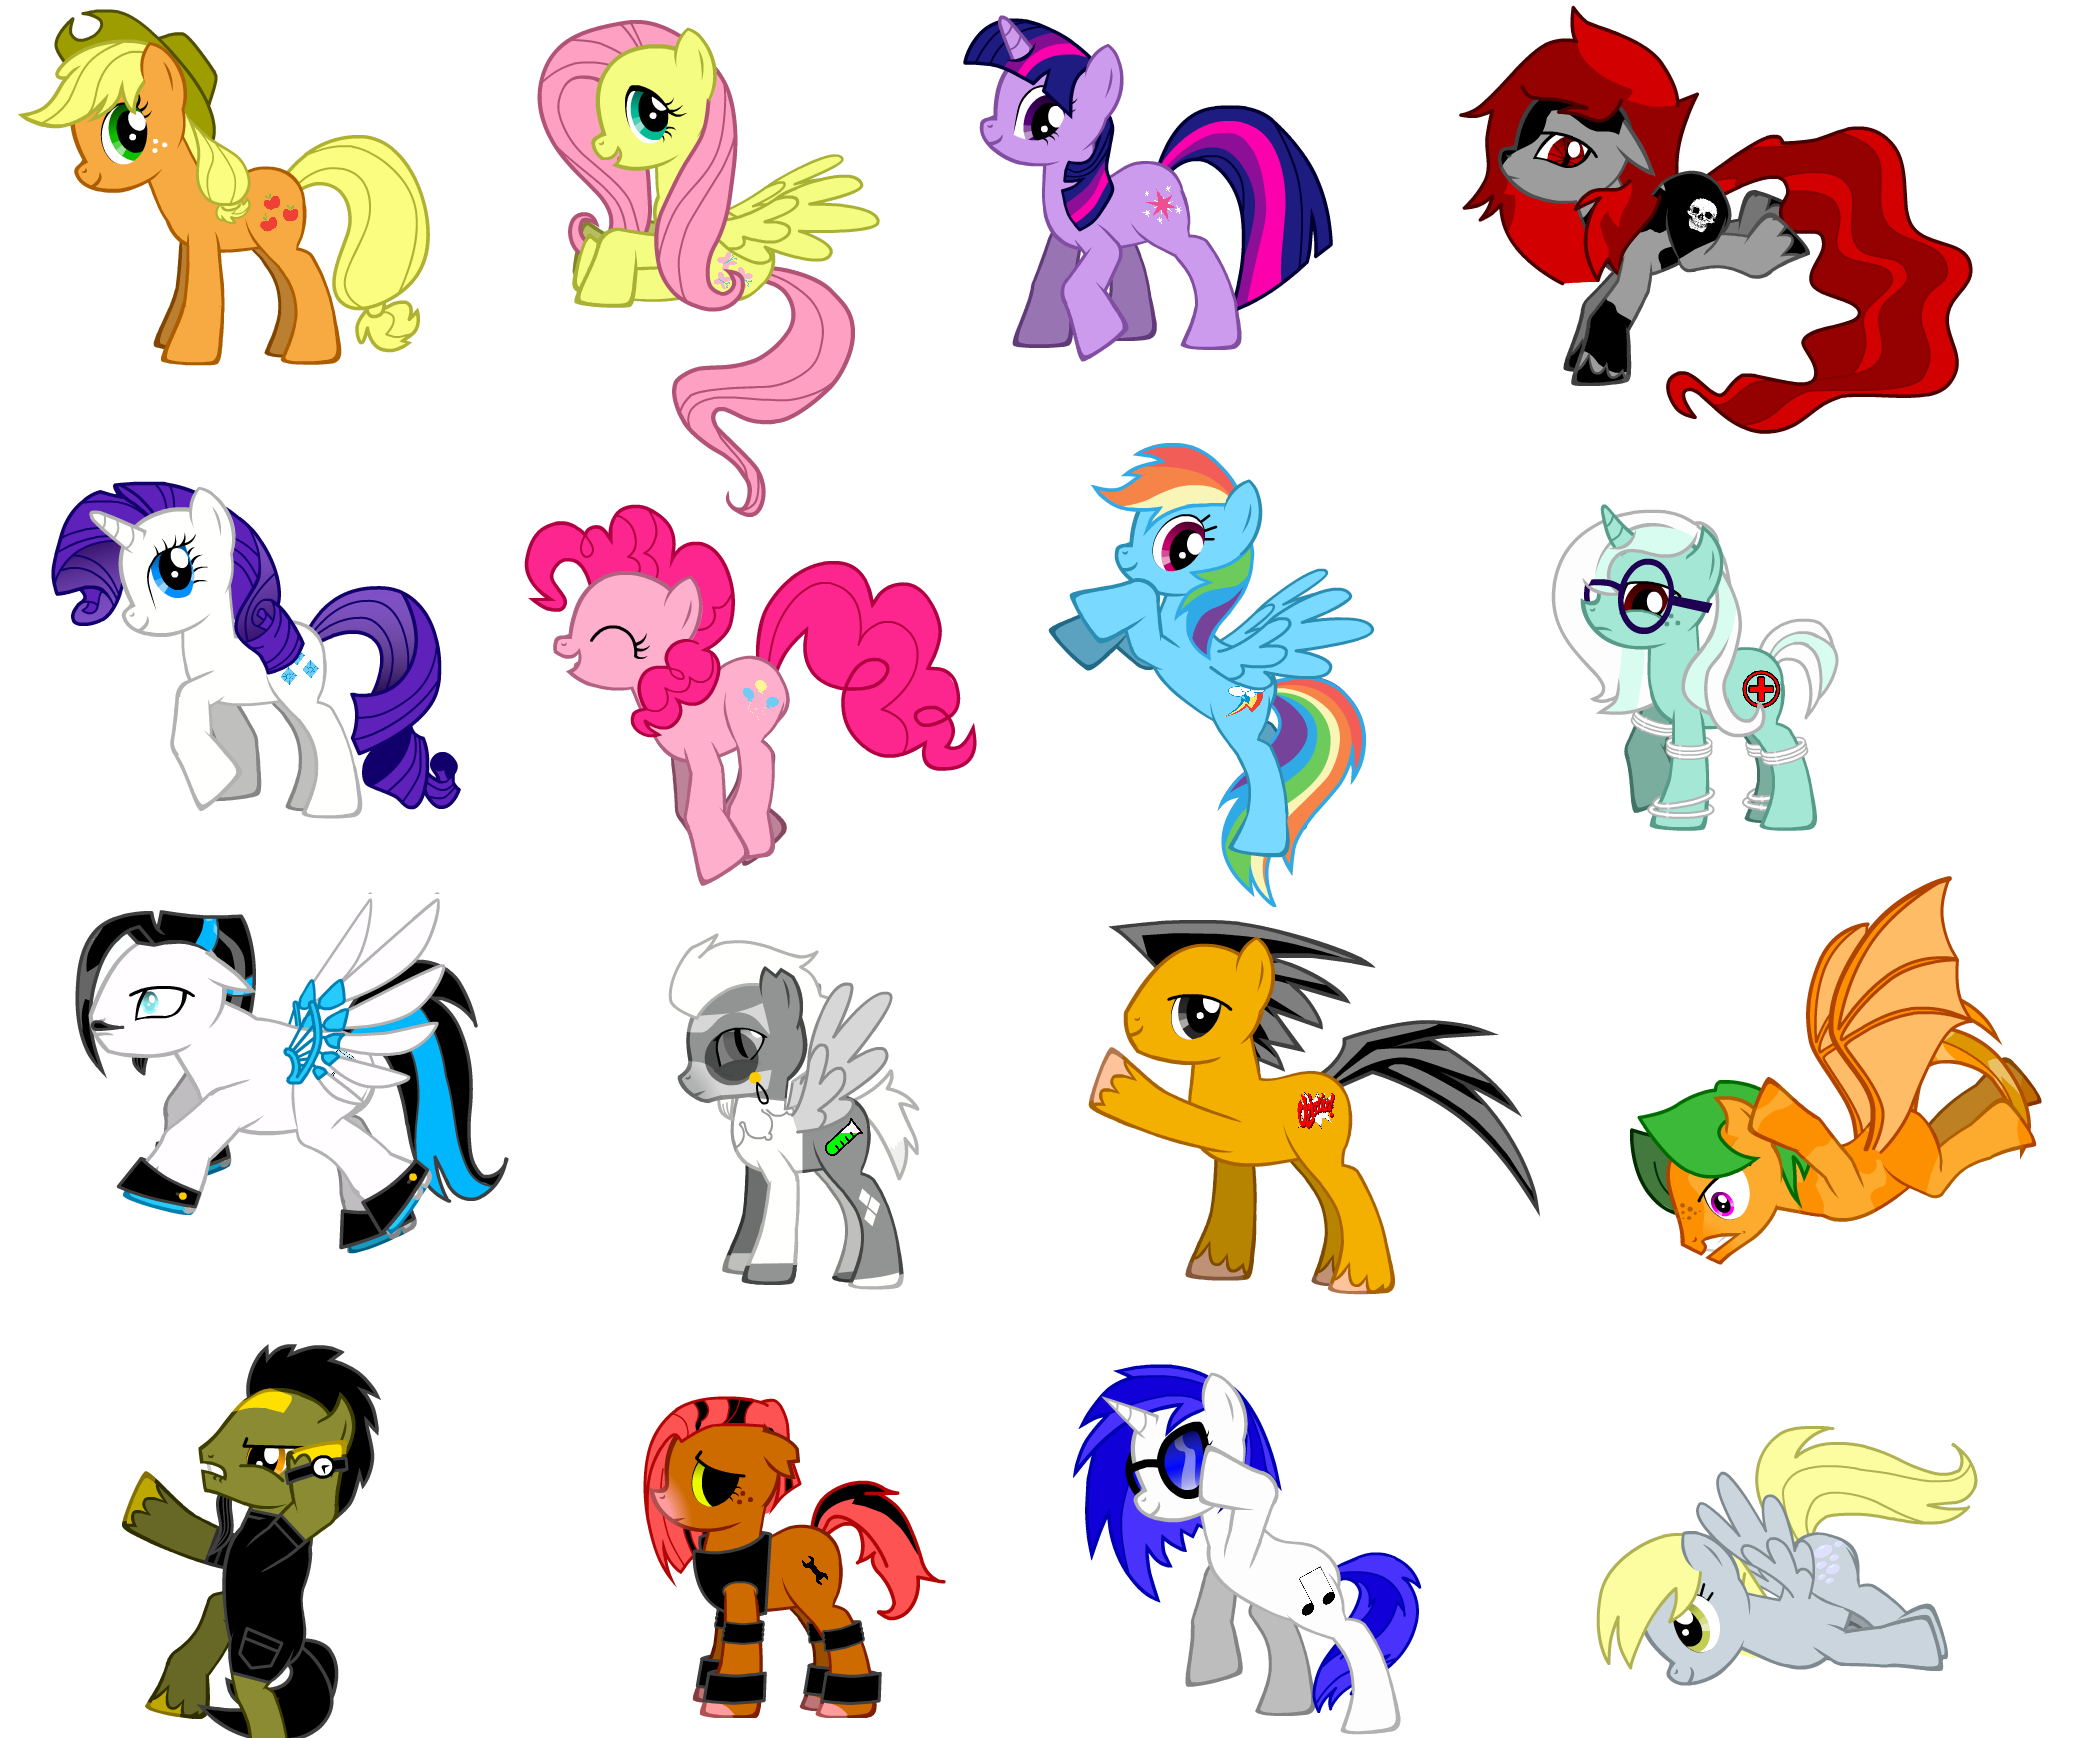 Pony character. МЛП персонажи. Пони имена. Имена мультяшных пони. My little Pony персонажи с именами.